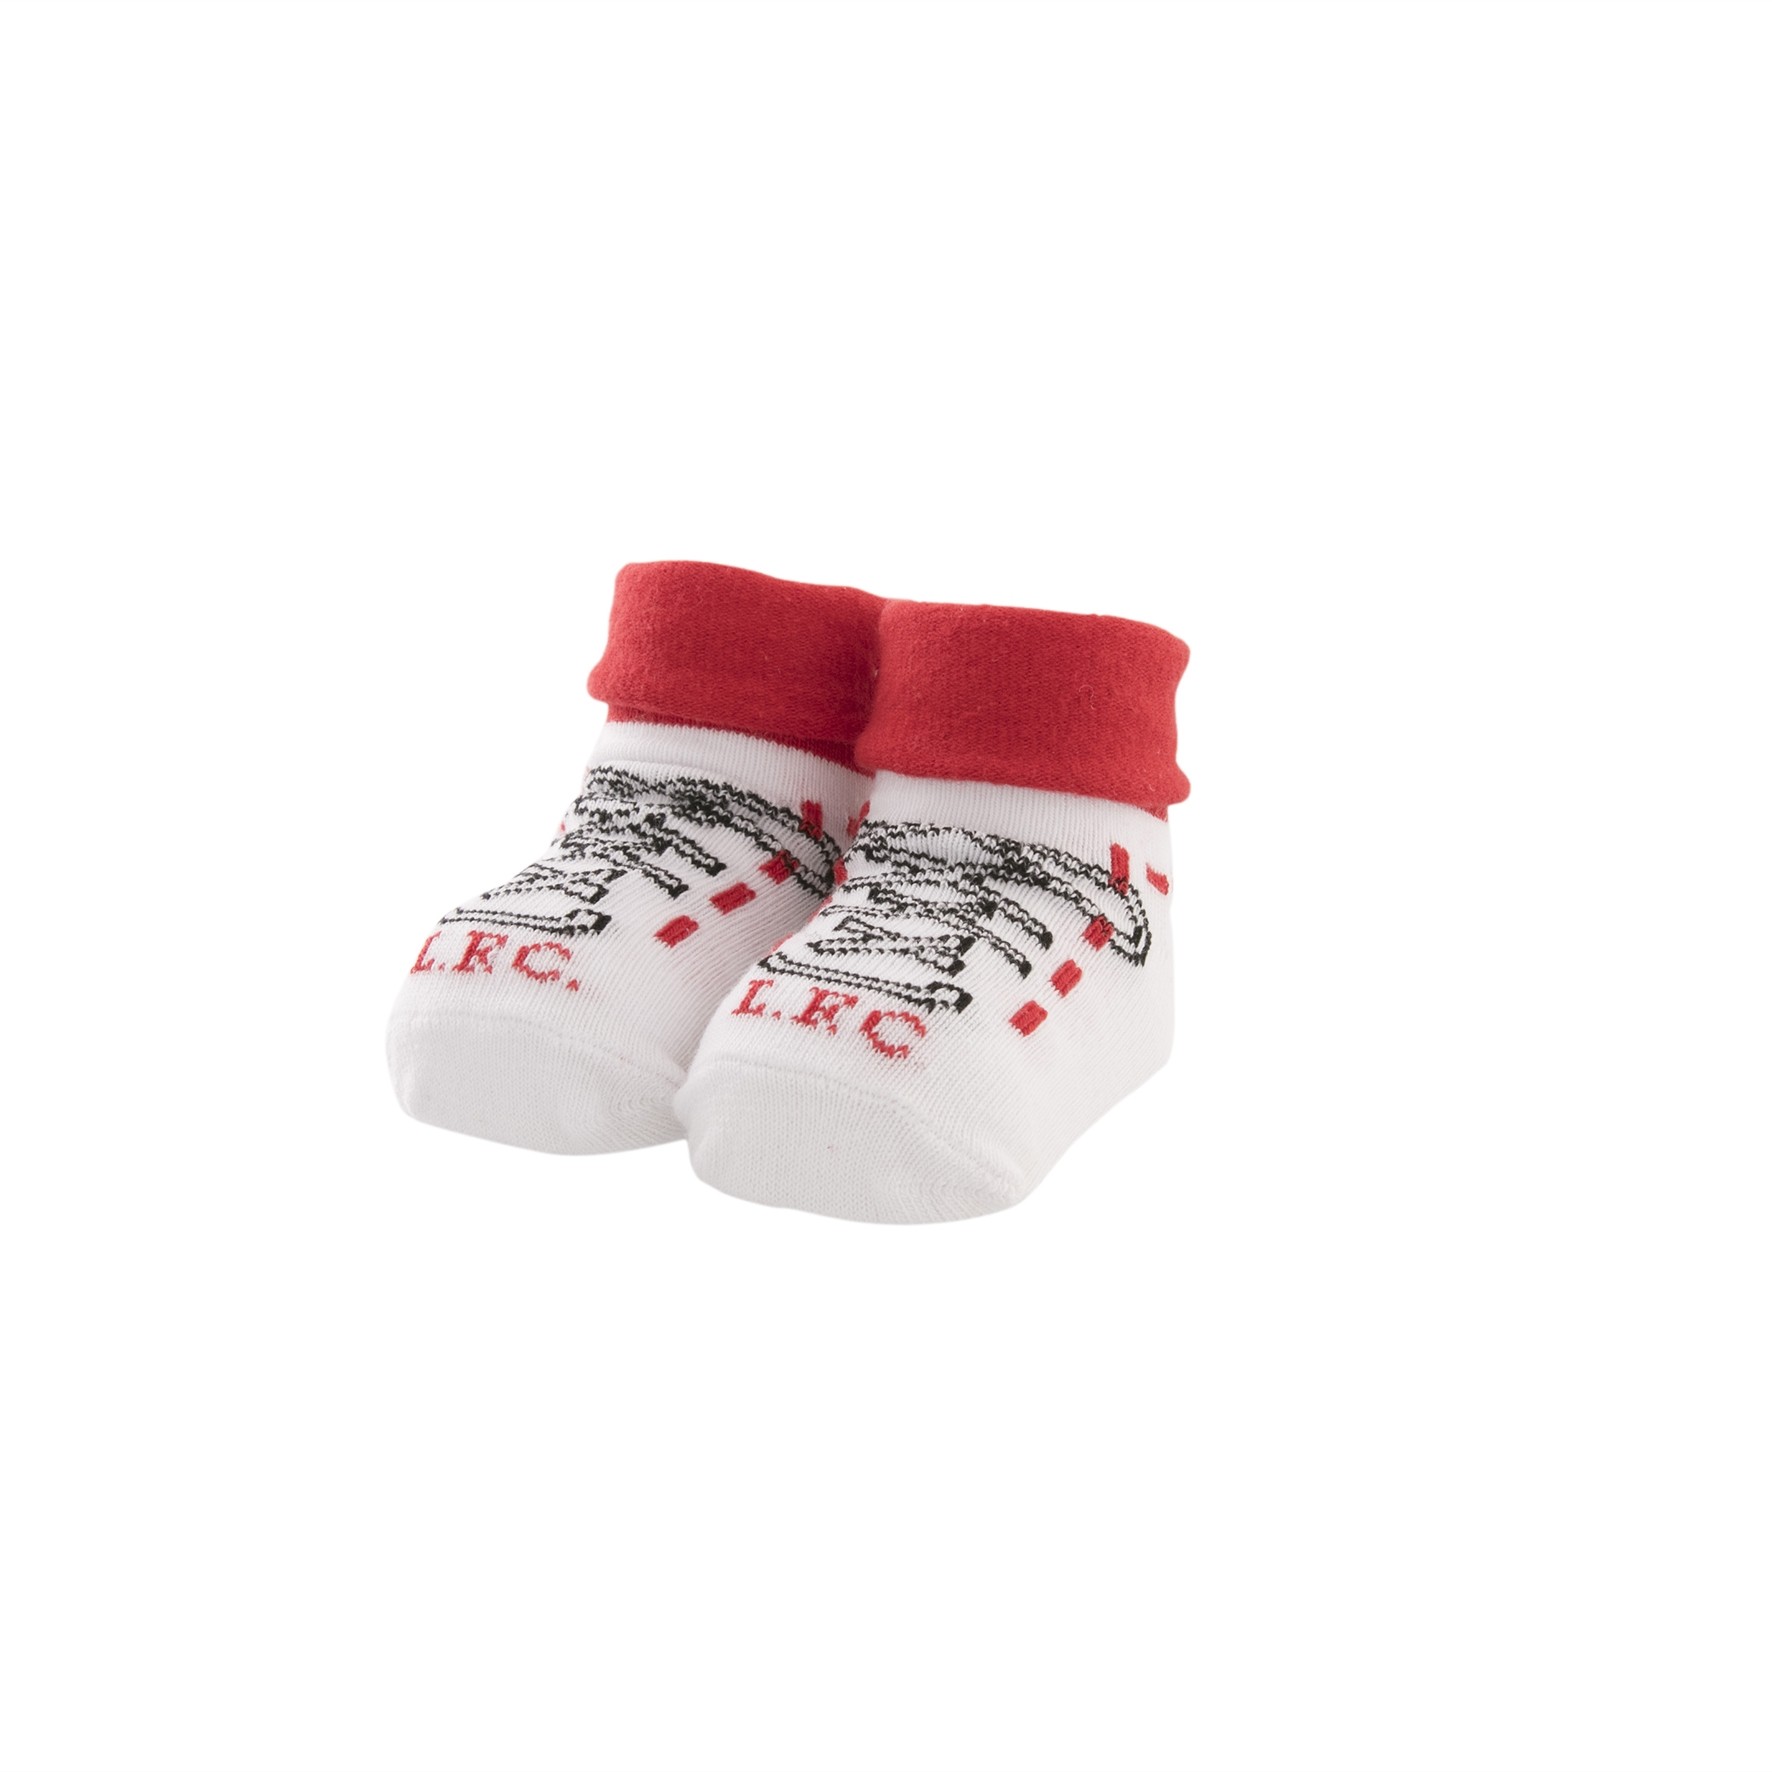 LFC Baby Boot Socks